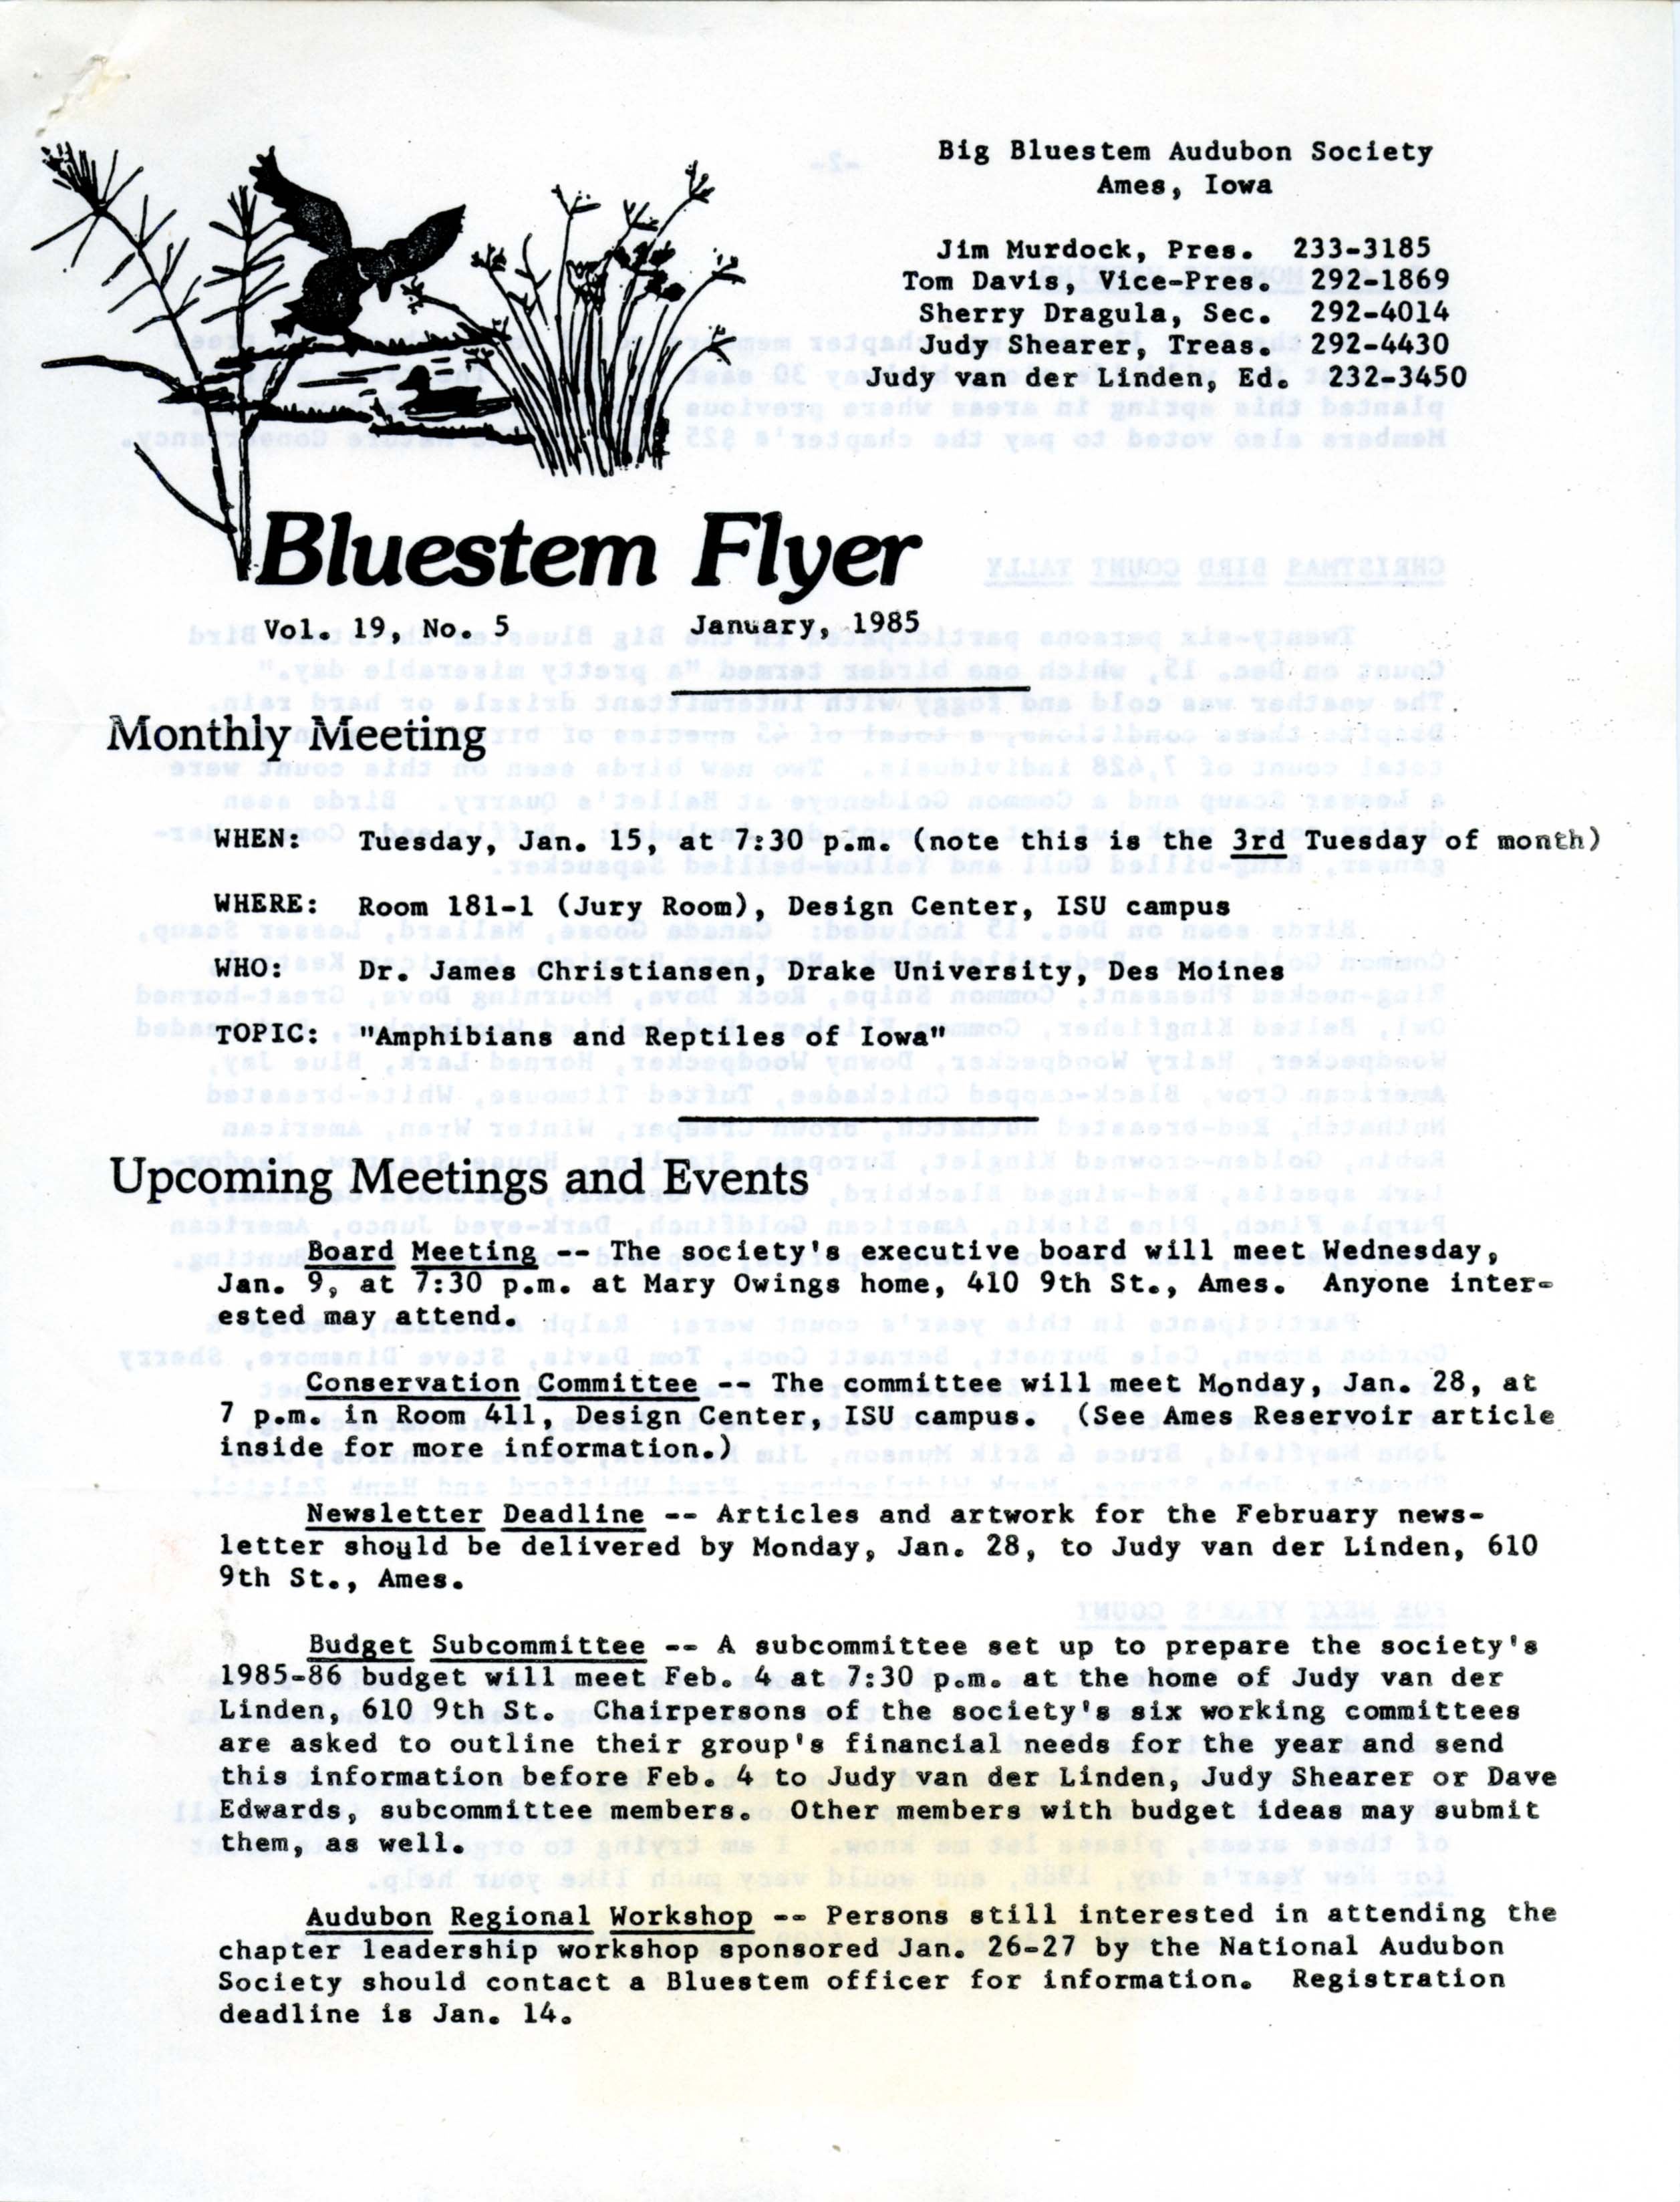 Bluestem Flyer, Volume 19, Number 5, January 1985